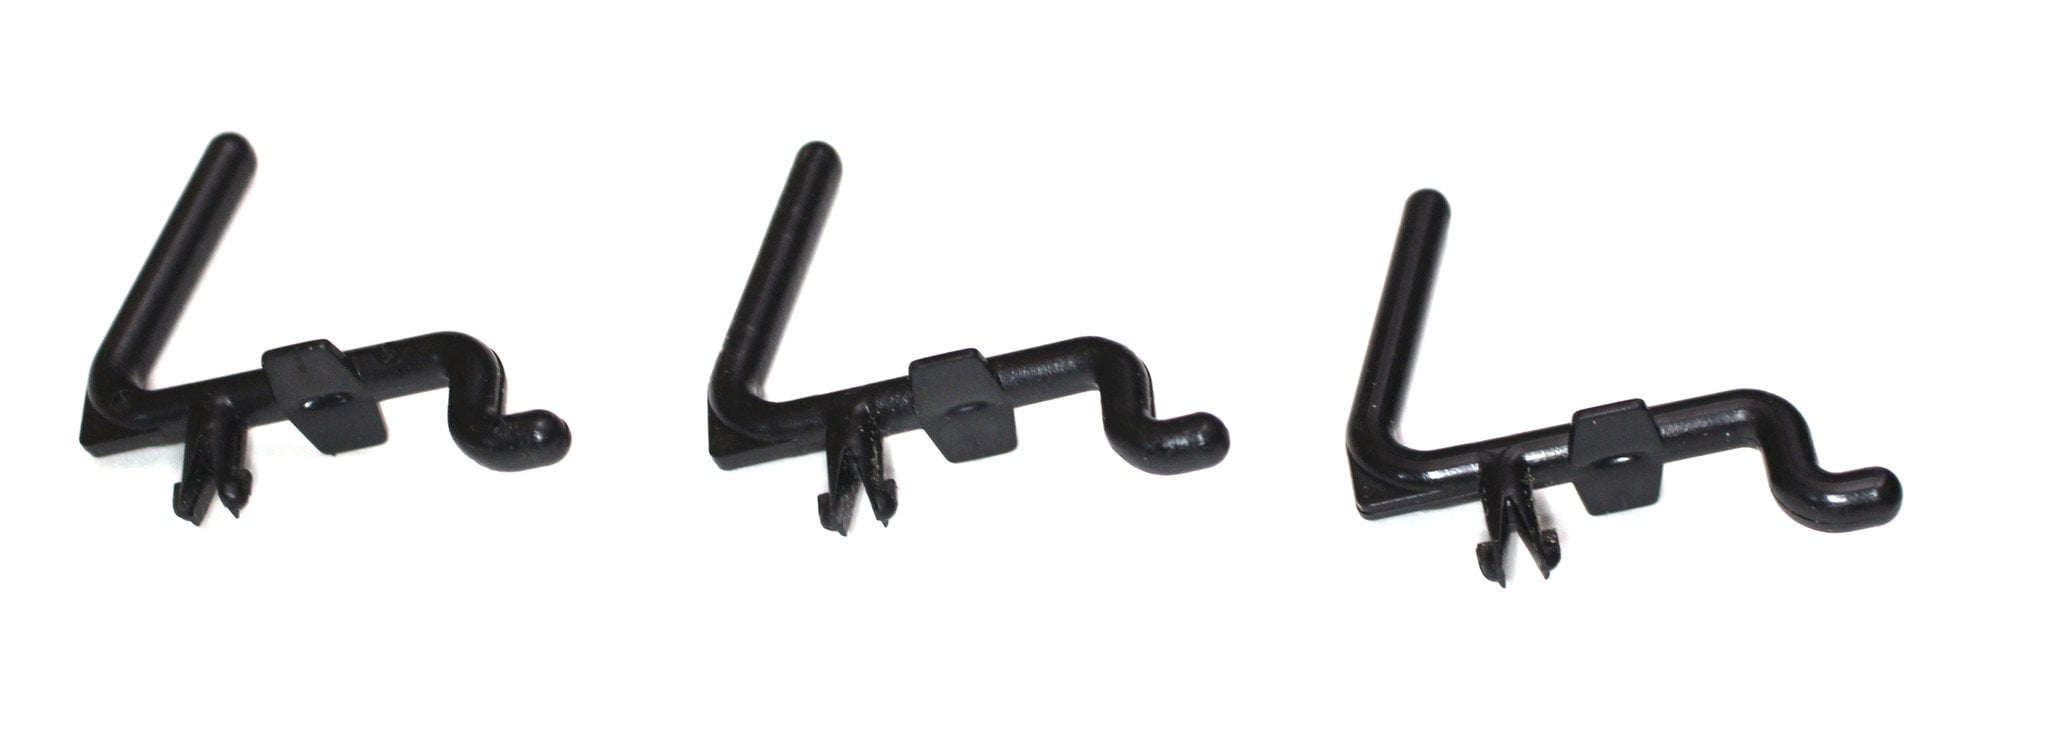 L Style Plastic Black Locking Pegboard Hook Kit - Multi-Pack / Garage  storage jewelry tools crafts Plastic Peg board hooks - Black 25 Pack 